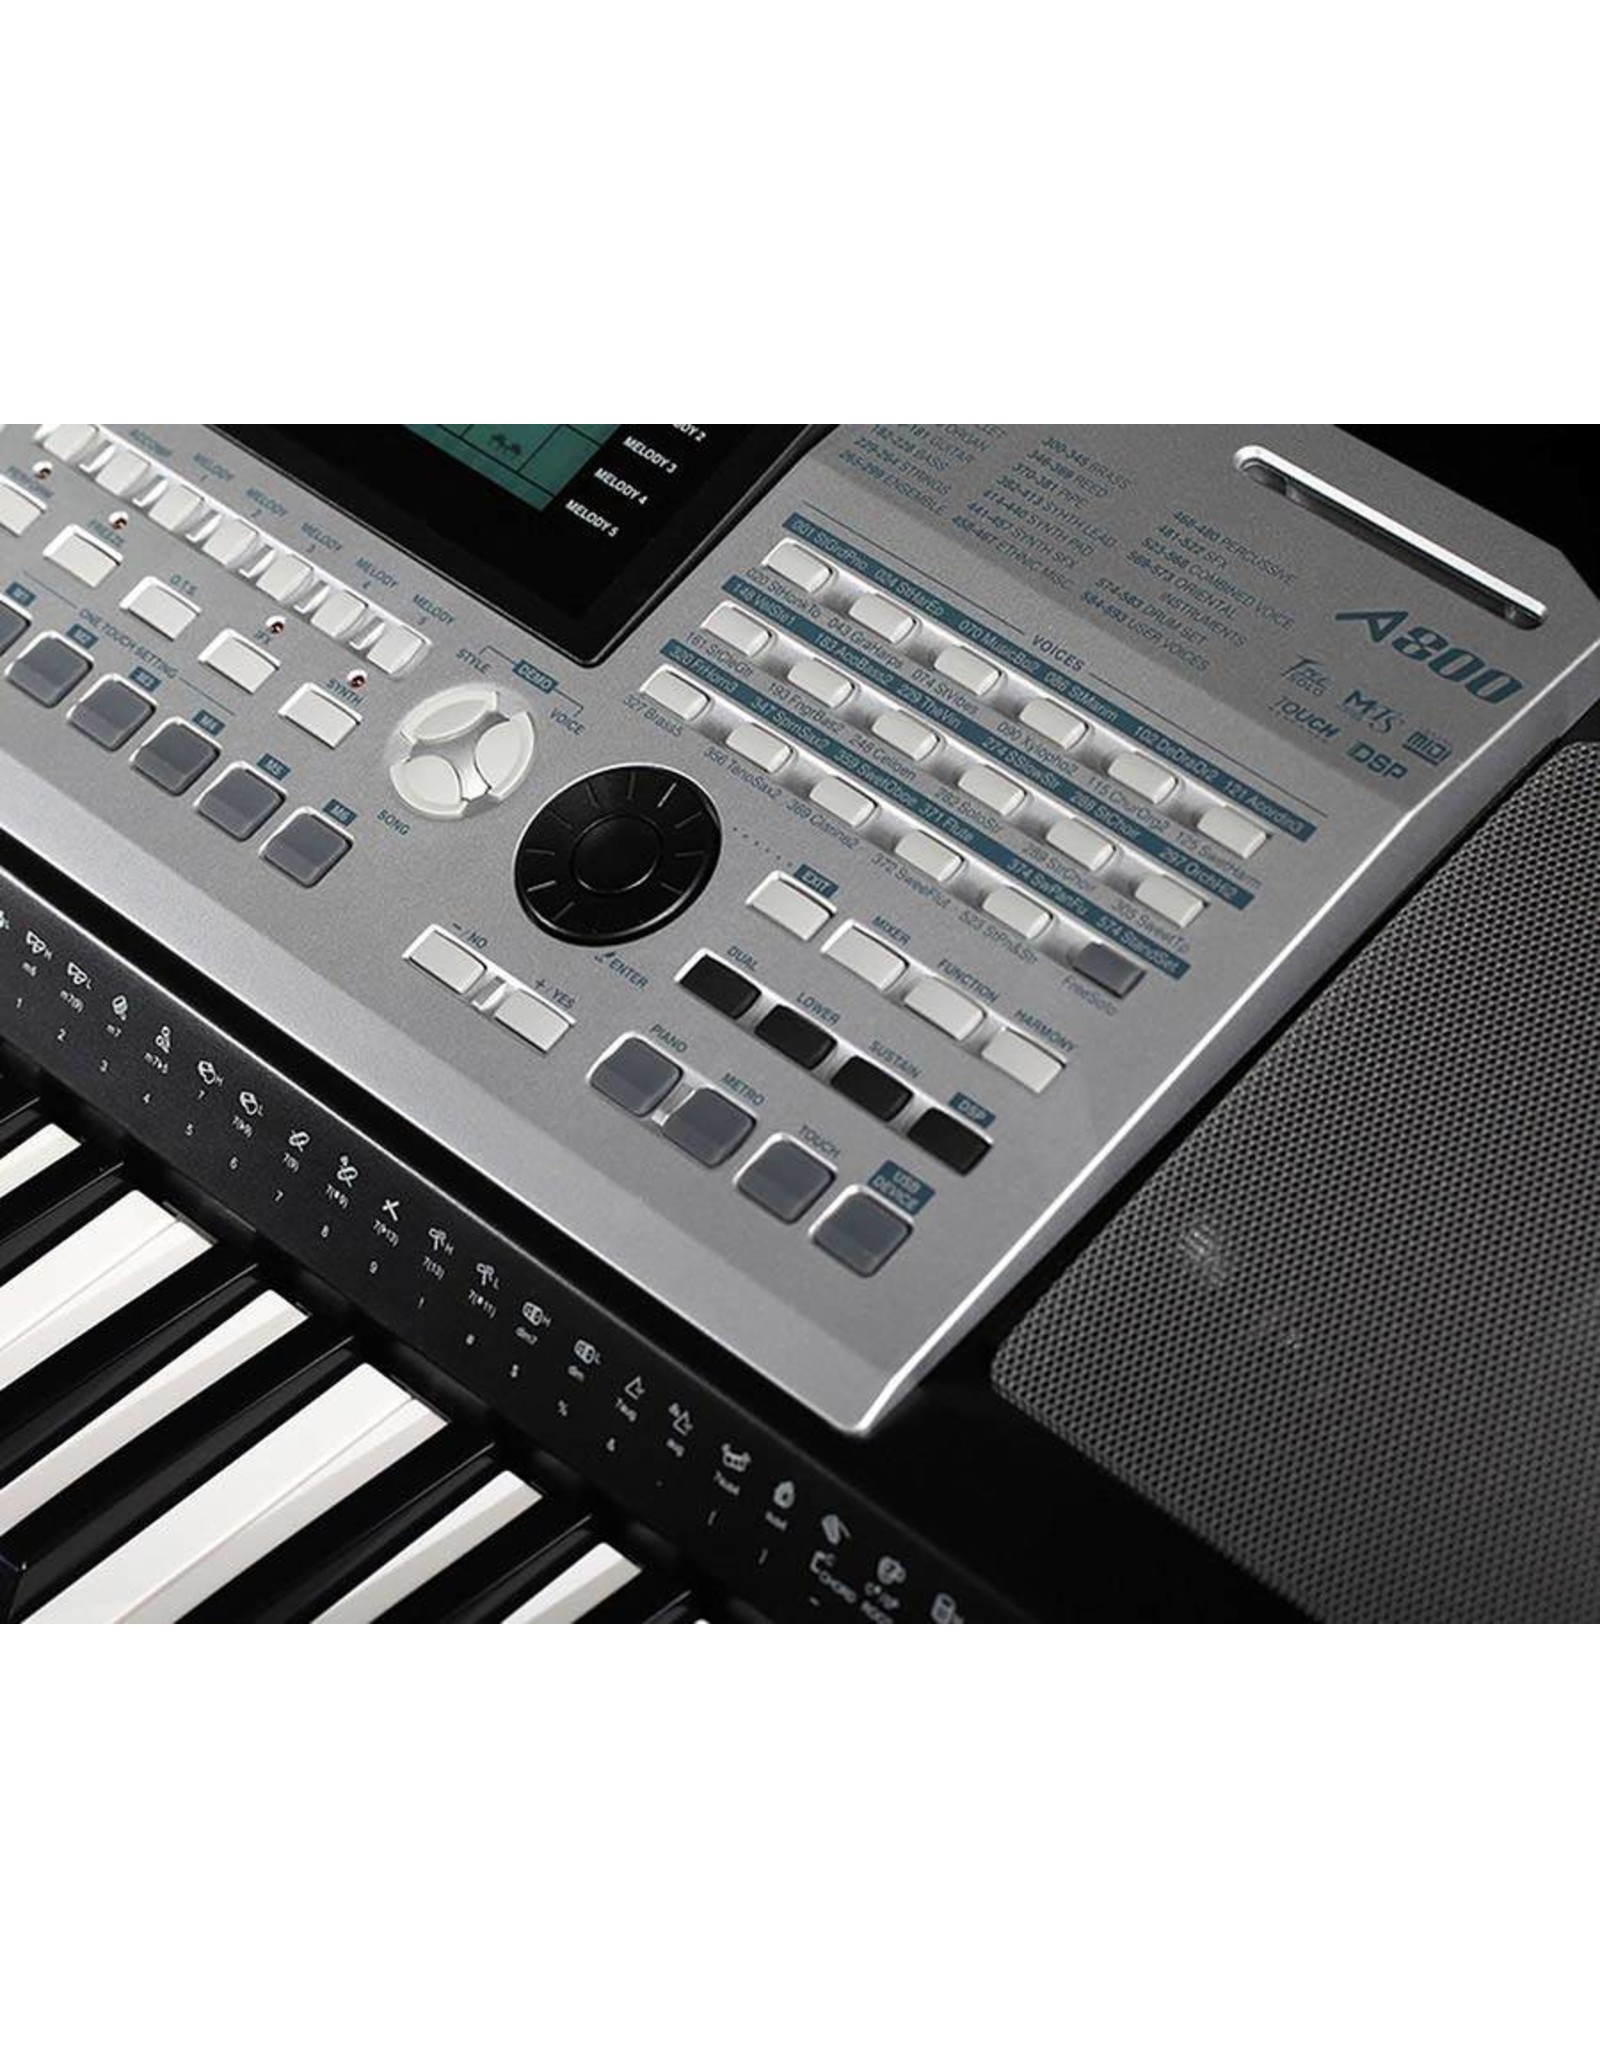 Medeli A800 portable electronic keyboard